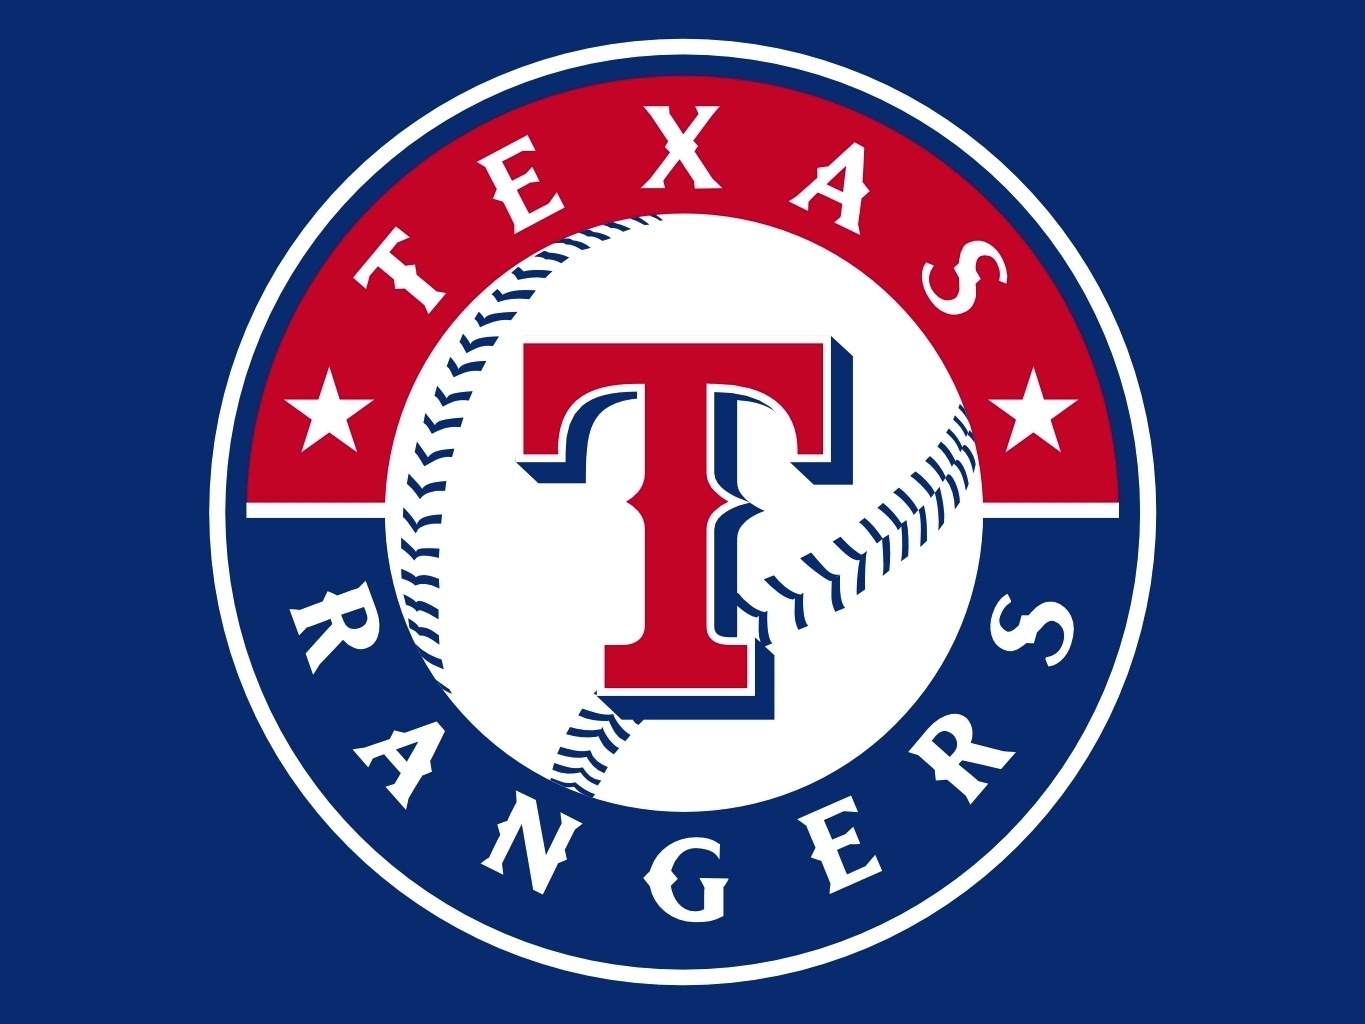 Texas Rangers vs. Cleveland Indians 2018 - TixBag MLB Baseball Tickets, Arlington, Texas, United States